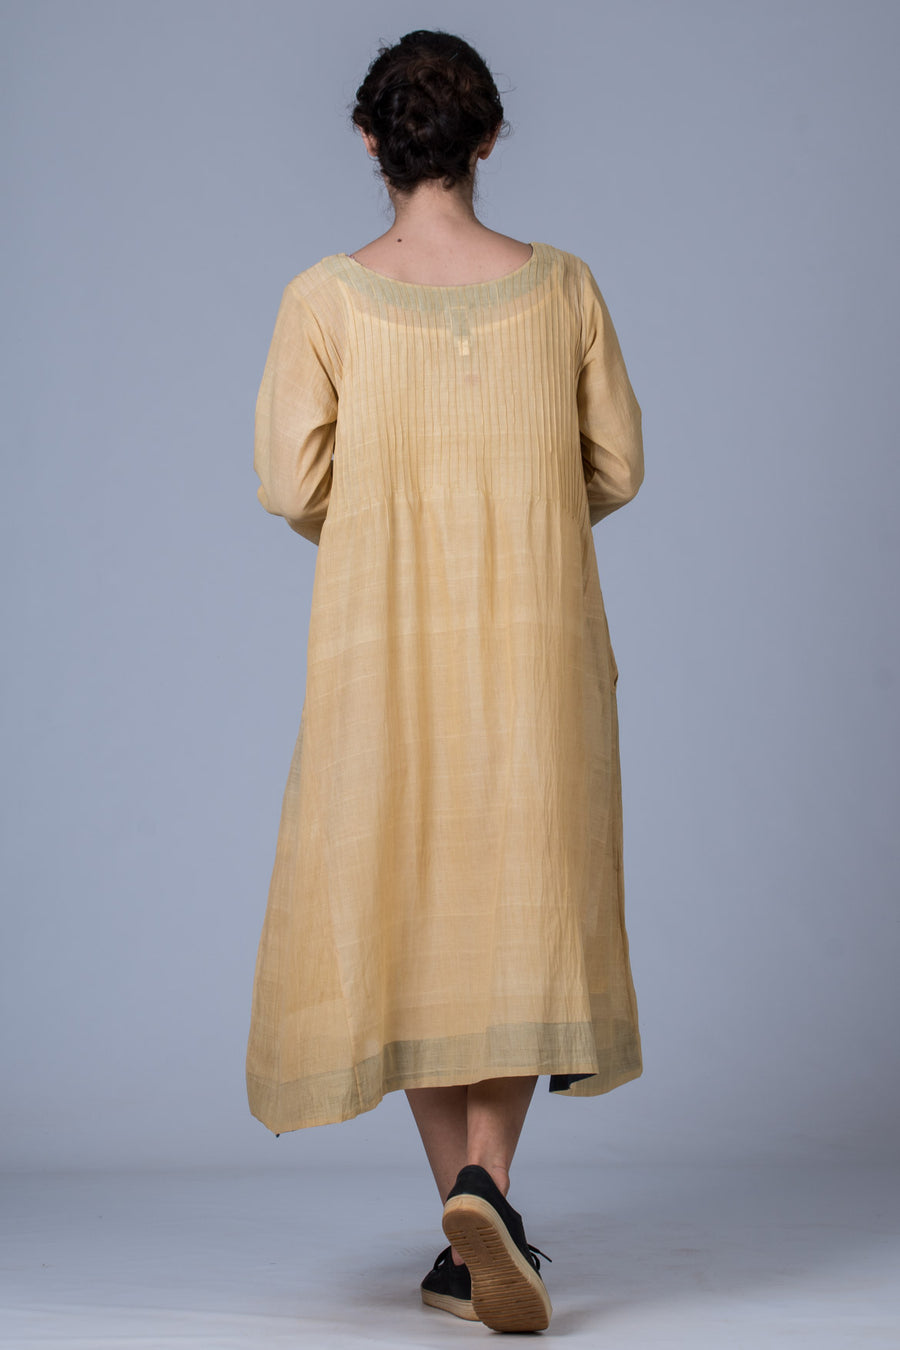 Neem dyed Organic cotton Dress - UDUPU - Upasana Design Studio